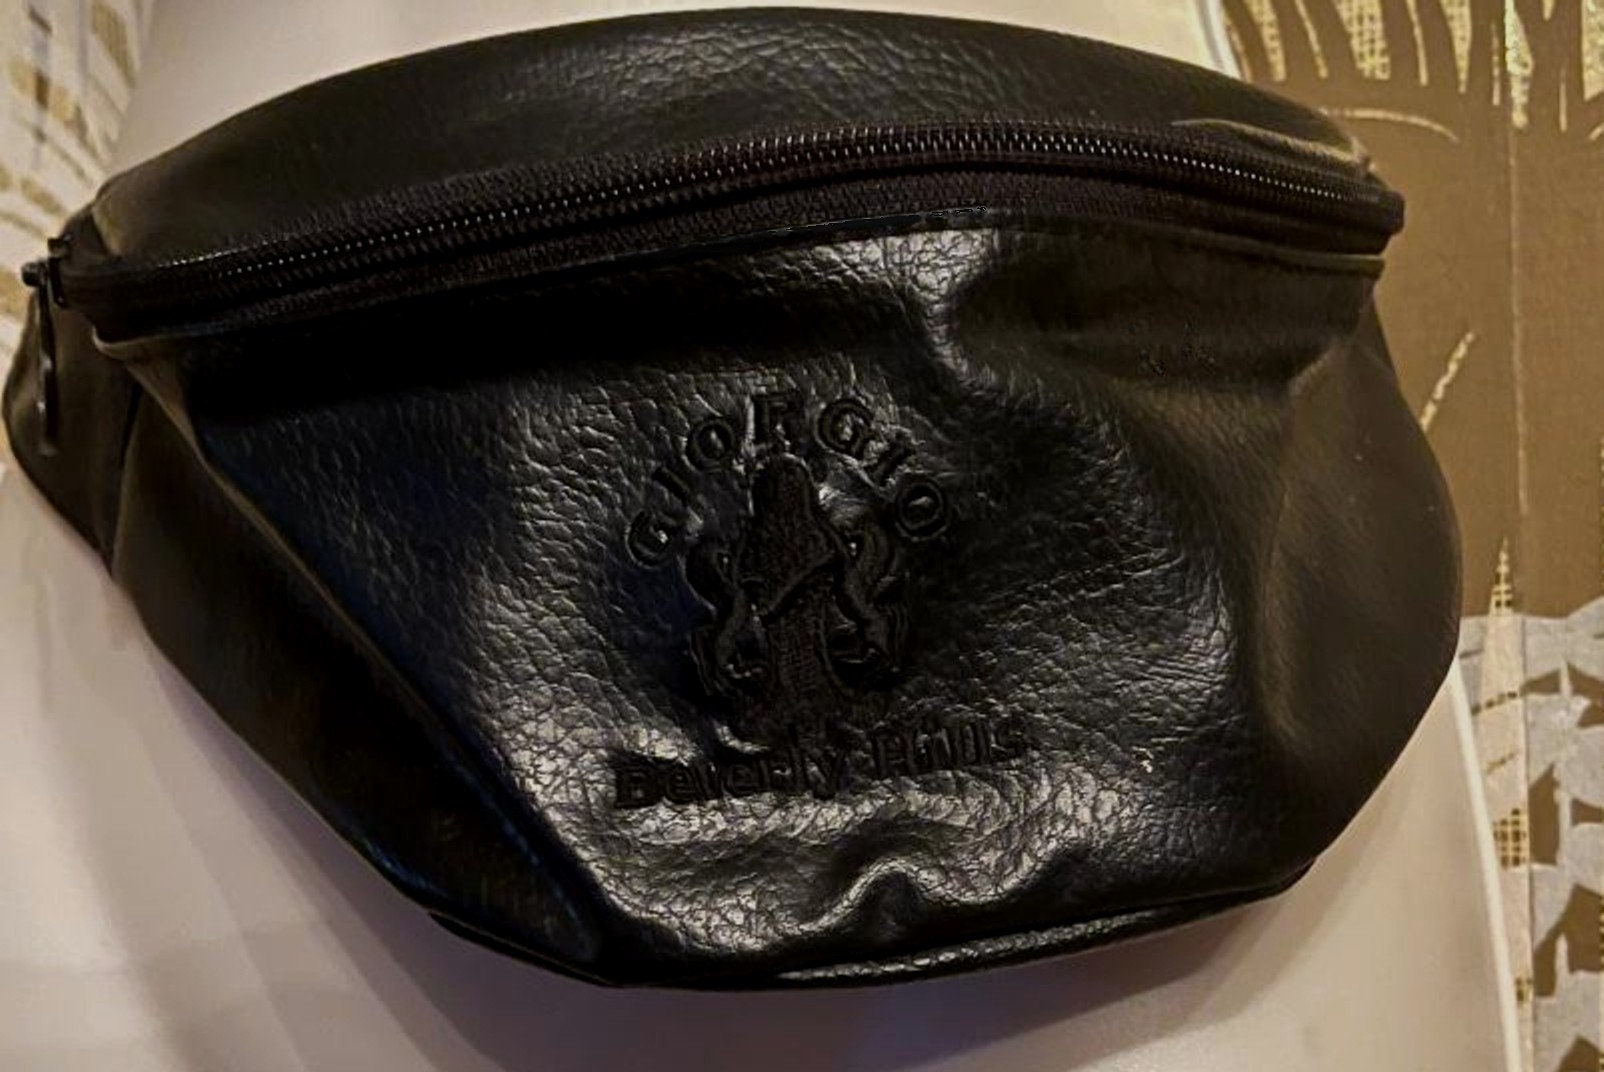 Vintage Handbags – RevivalVintage